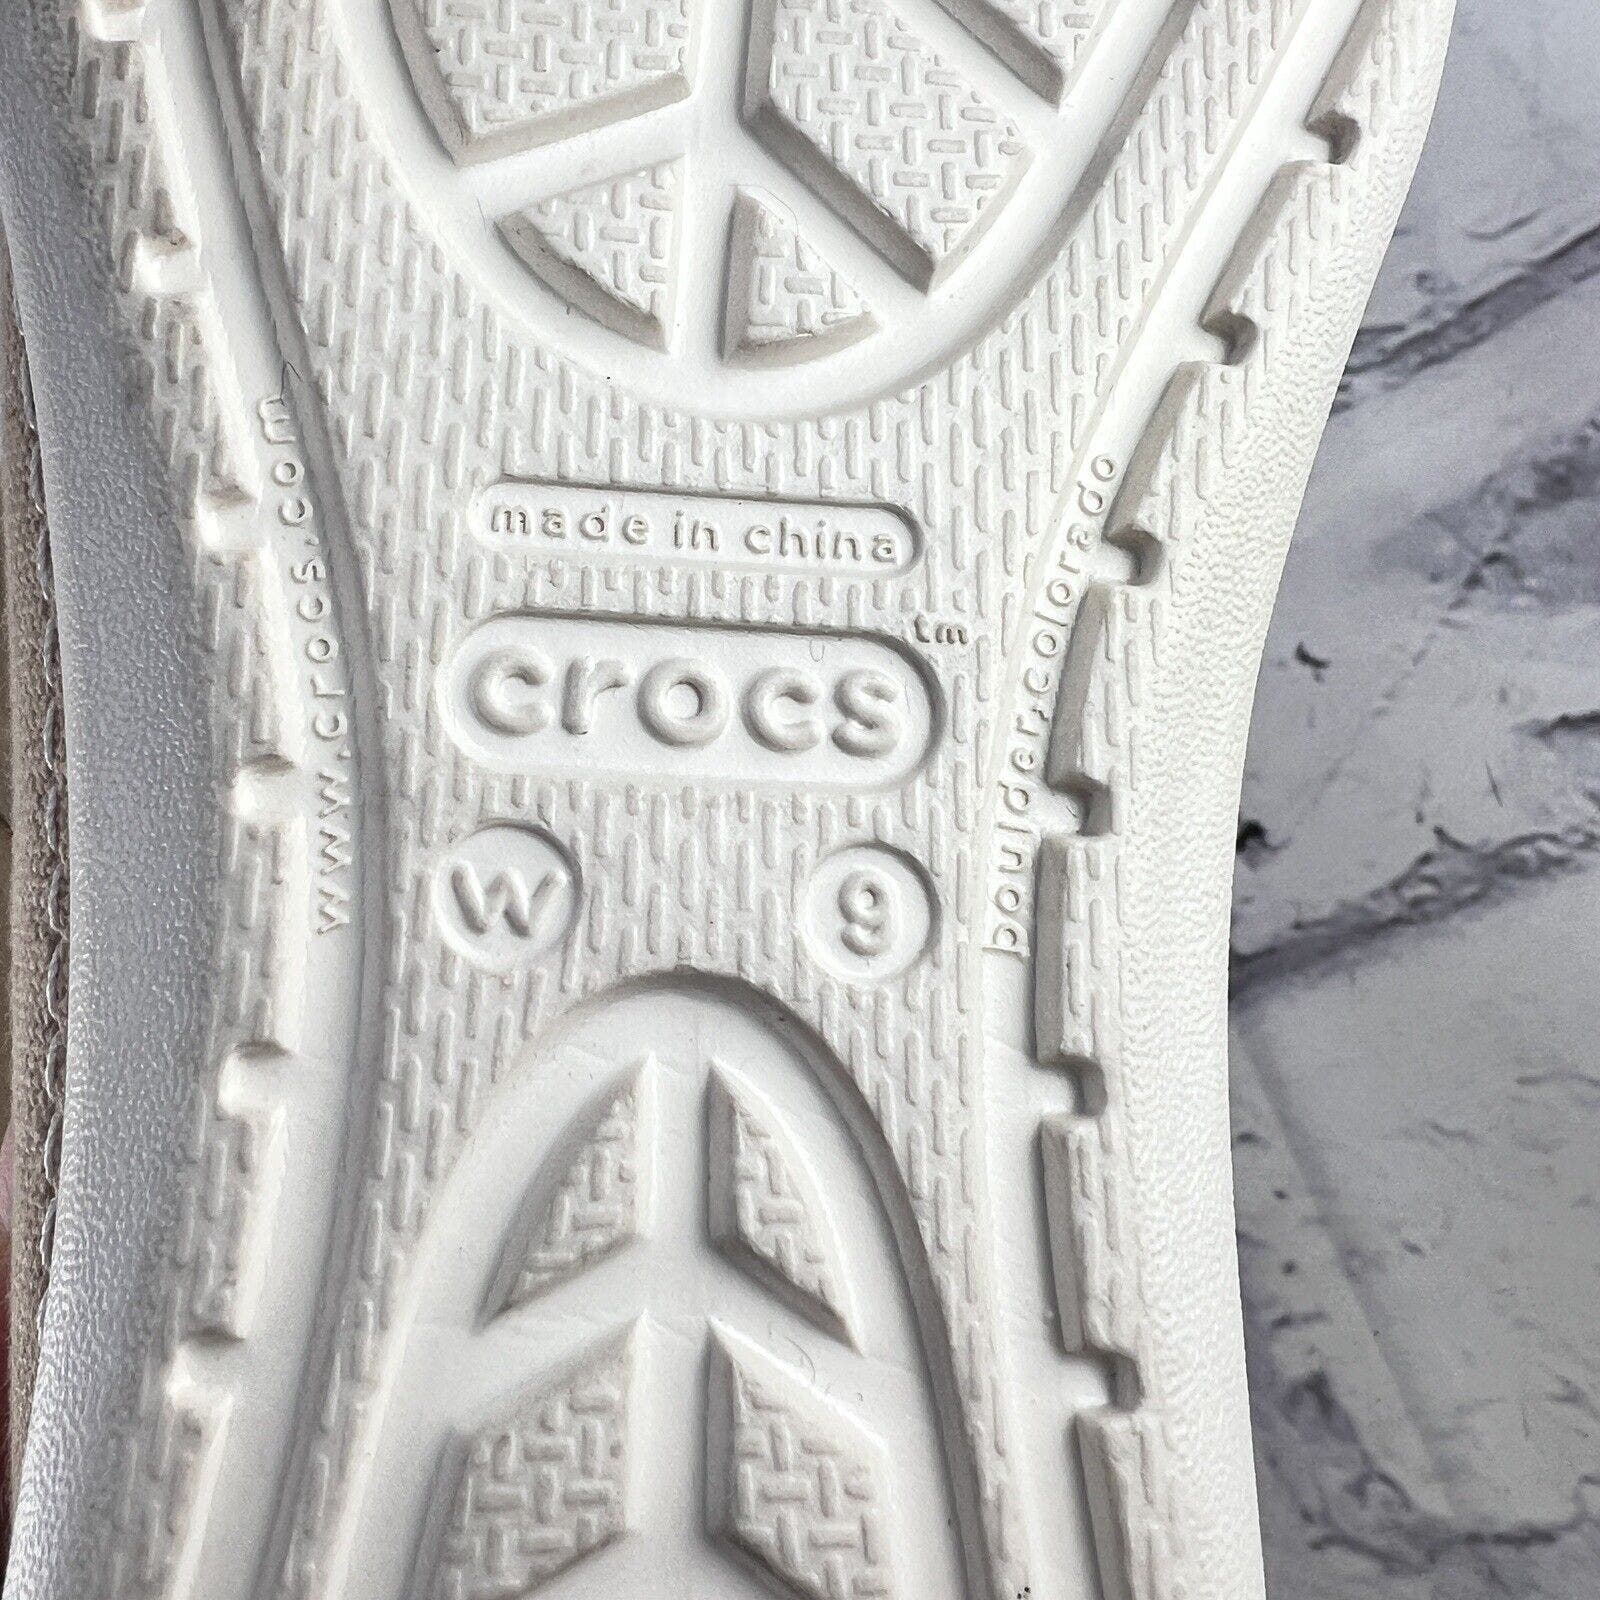 Crocs Santa Cruz Women’s Size 9 Canvas Slip On Comfort Shoe Beige Casual